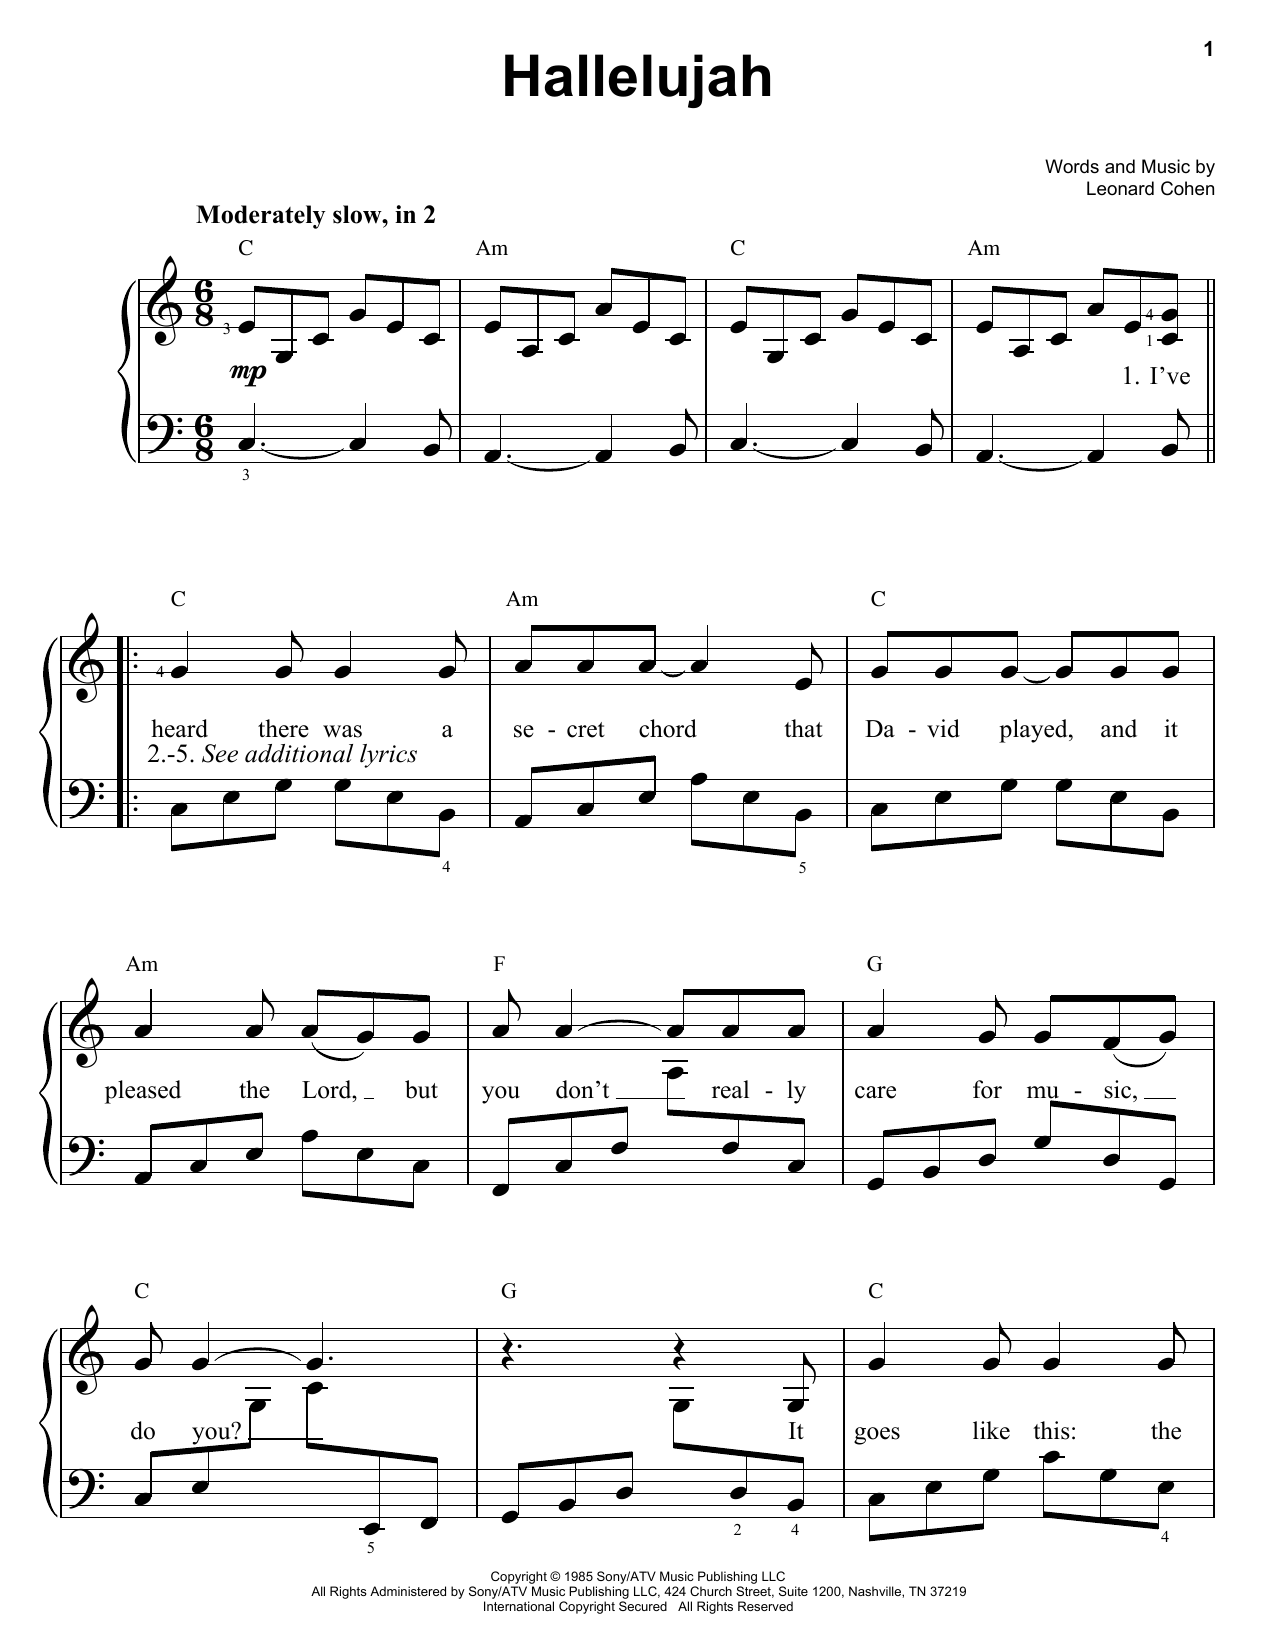 Leonard Cohen Hallelujah Sheet Music Notes & Chords for Guitar Lead Sheet - Download or Print PDF